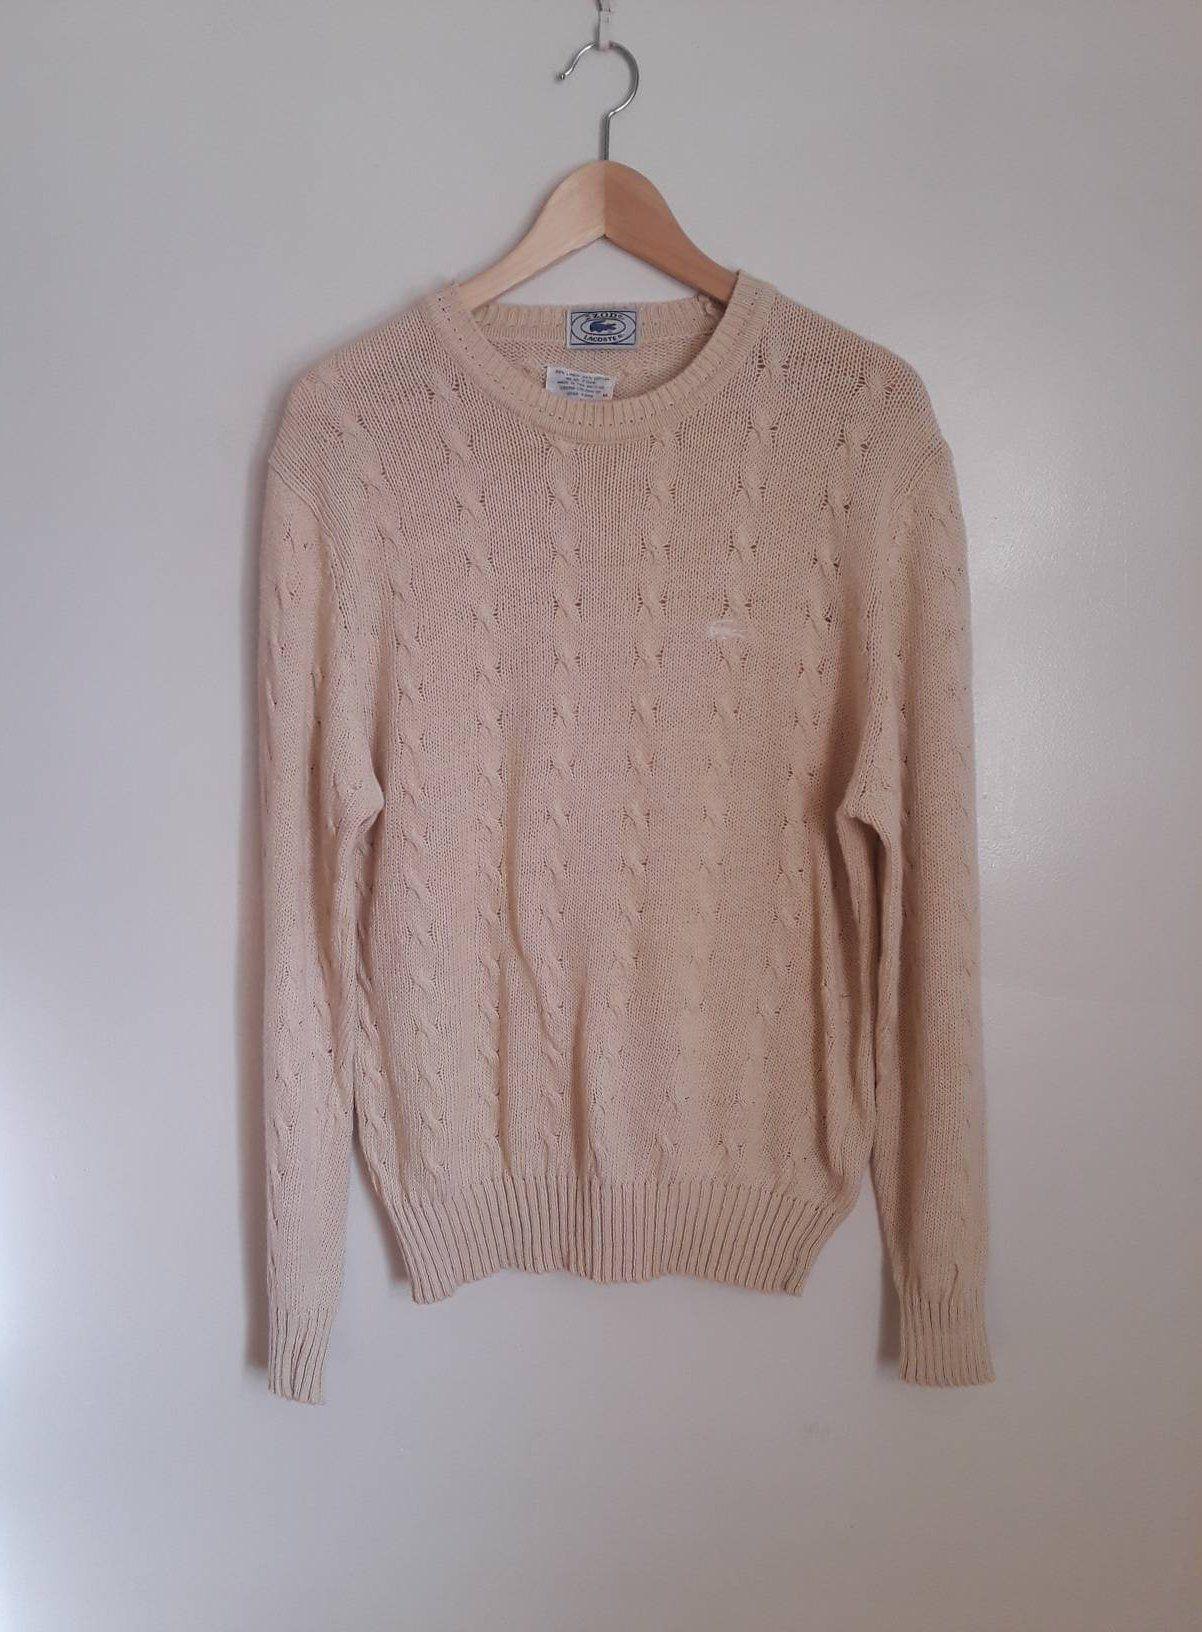 Izod Crocodile Logo - Vintage 1980's Izod Lacoste Cream Cotton Linen Cable Knit Sweater ...